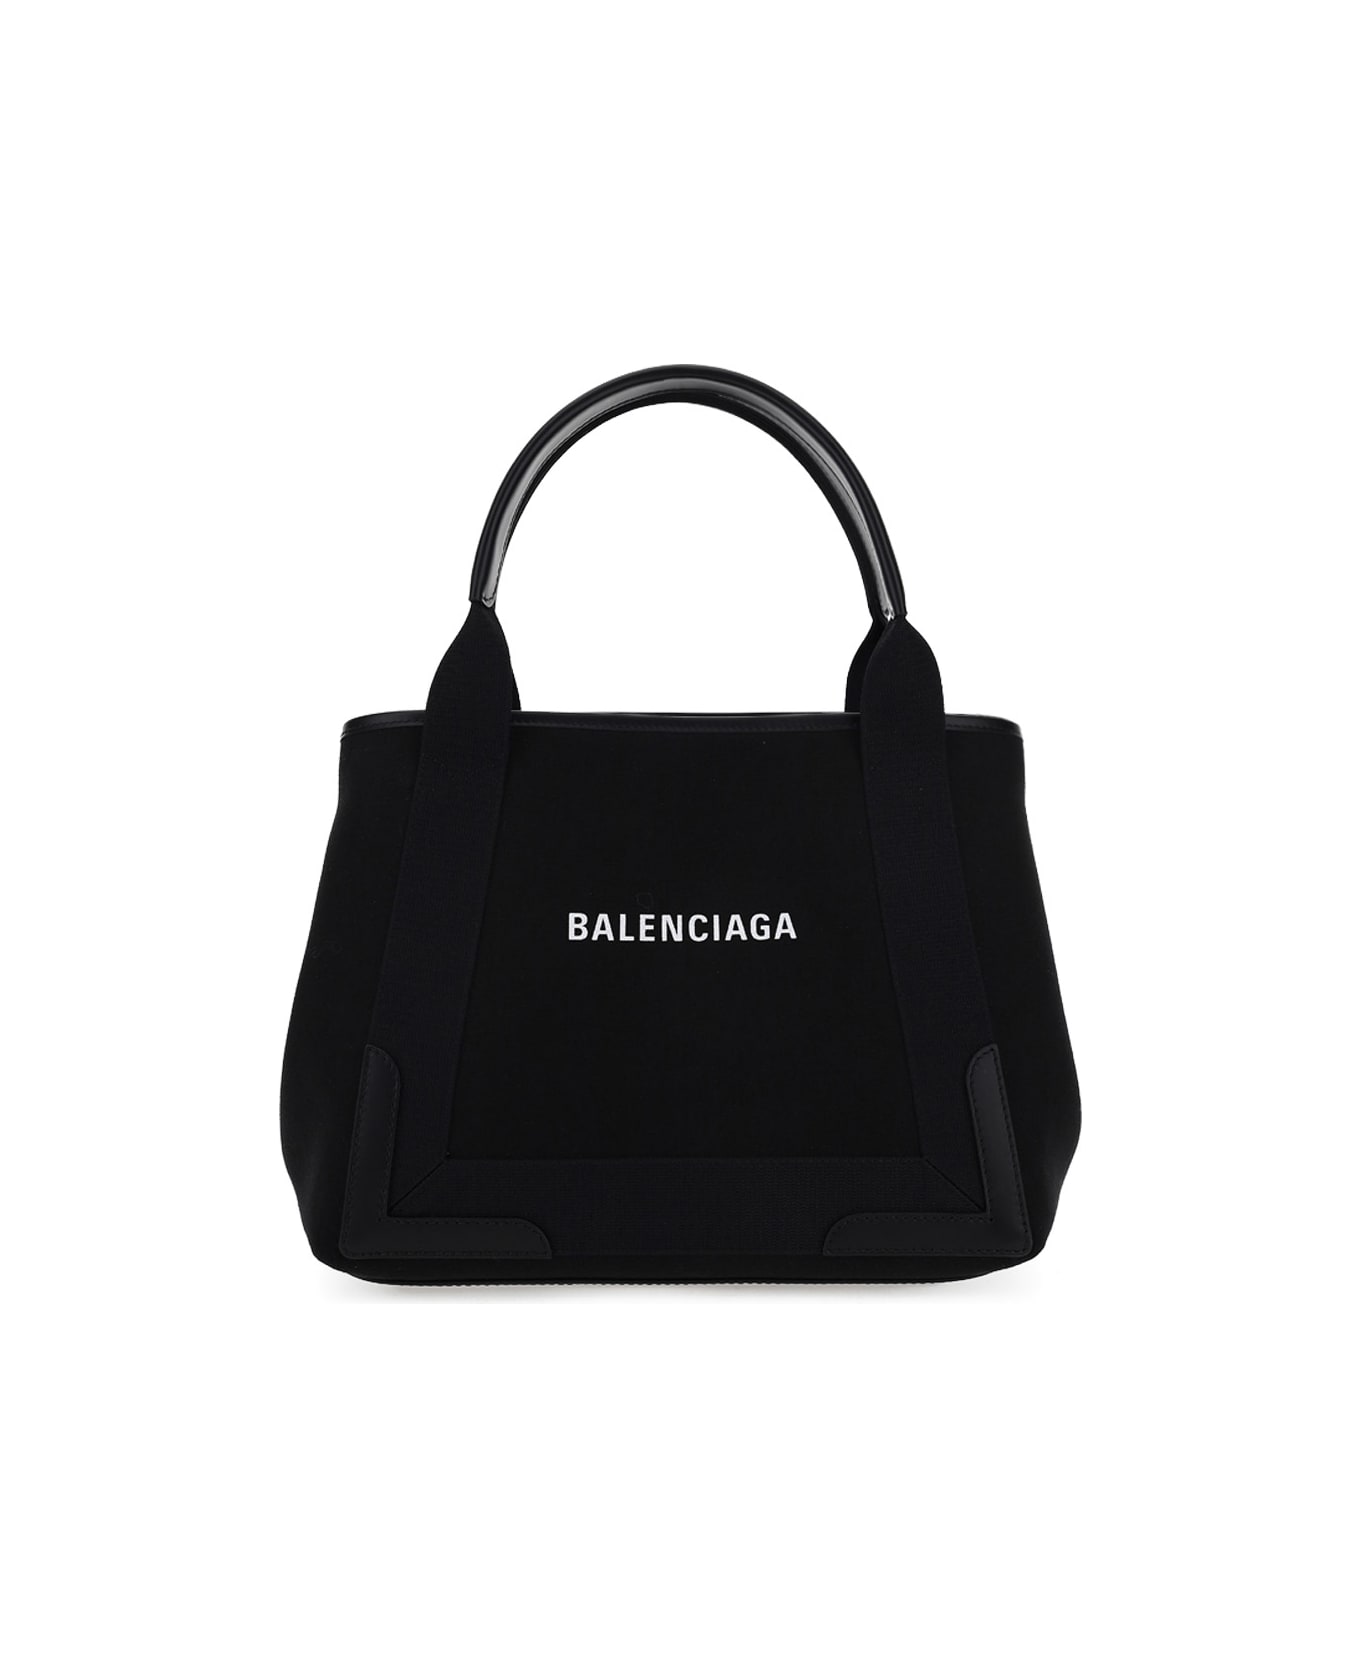 Balenciaga Tote Bag - Black トートバッグ